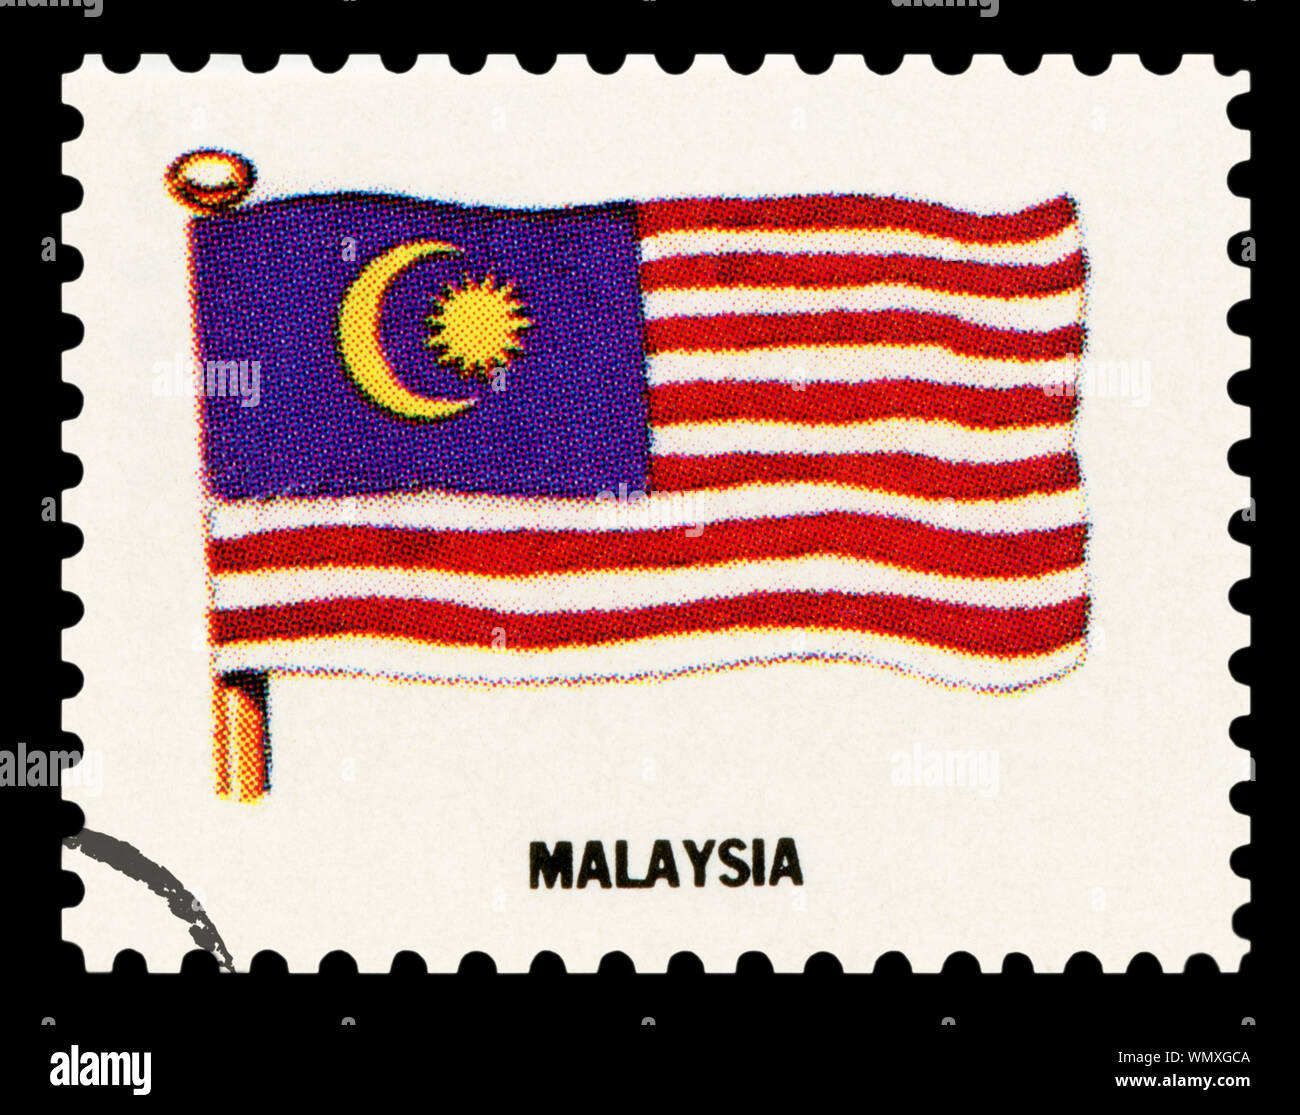 MALAYSIA FLAG - Postage Stamp isolated on black background. Stock Photo